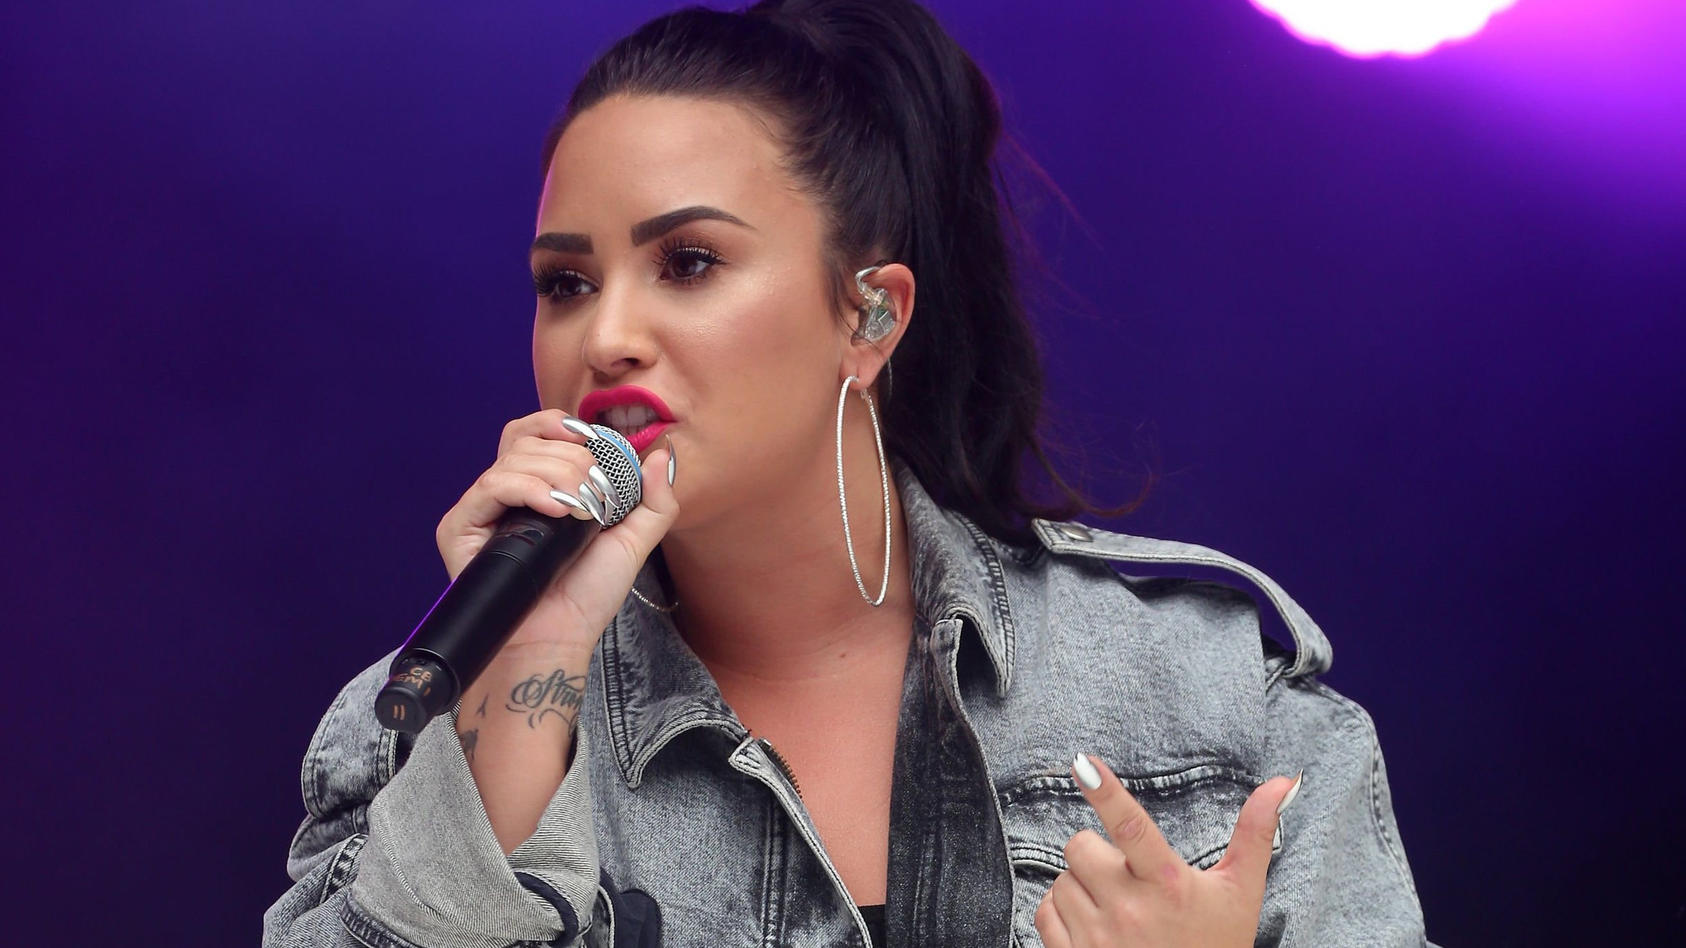 ARCHIV - 24.07.2018, England, Suffolk: US-Sängerin Demi Lovato. (zu dpa "Sängerin Demi Lovato singt dieses Jahr US-Hymne beim Super Bowl") Foto: Isabel Infantes/PA Wire/dpa +++ dpa-Bildfunk +++